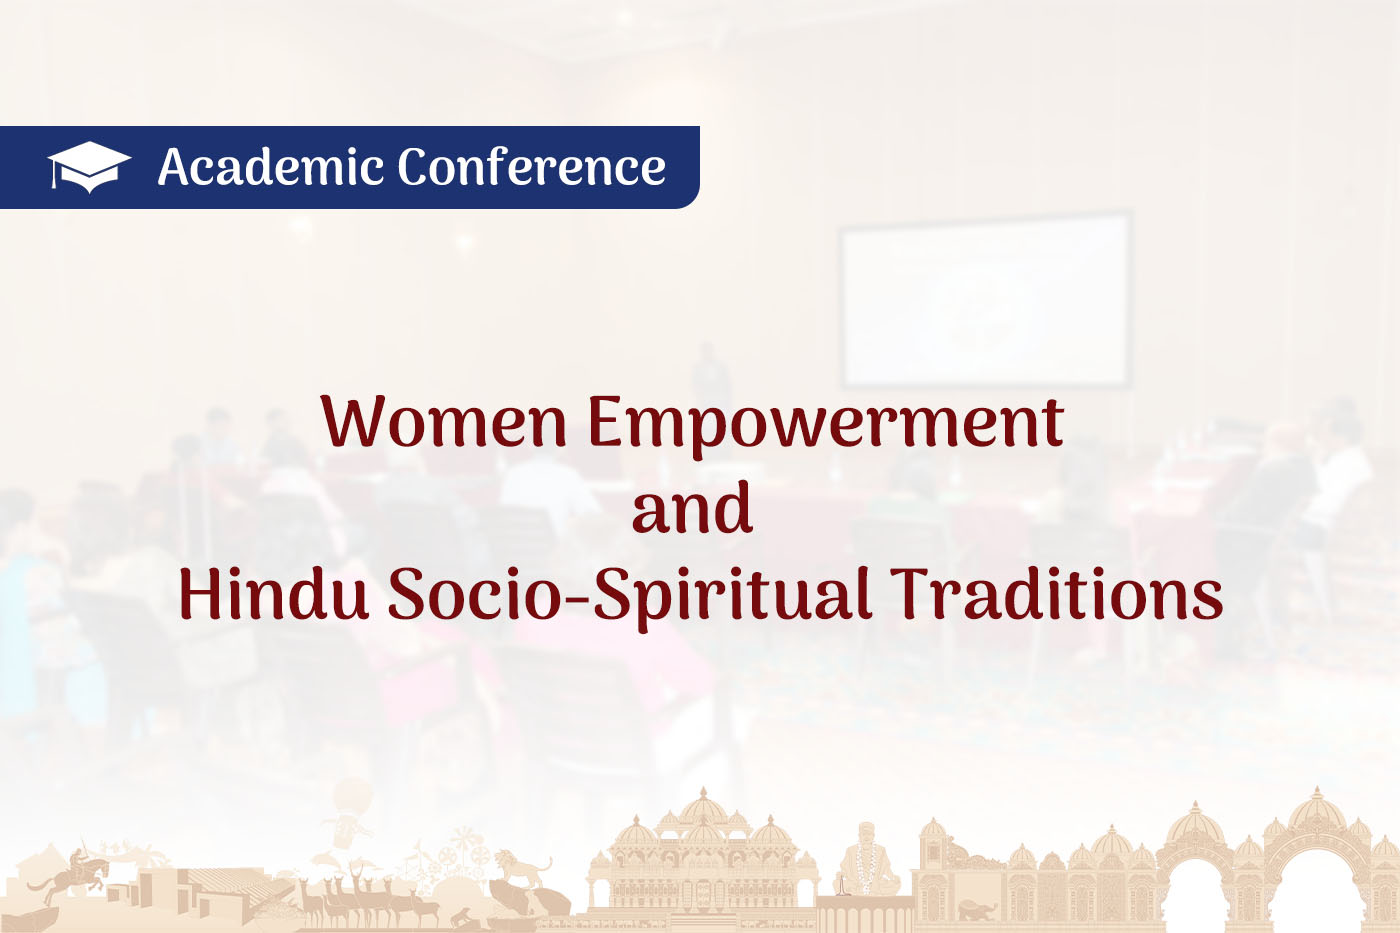 Women Empowerment and Hindu Socio-Spiritual Traditions